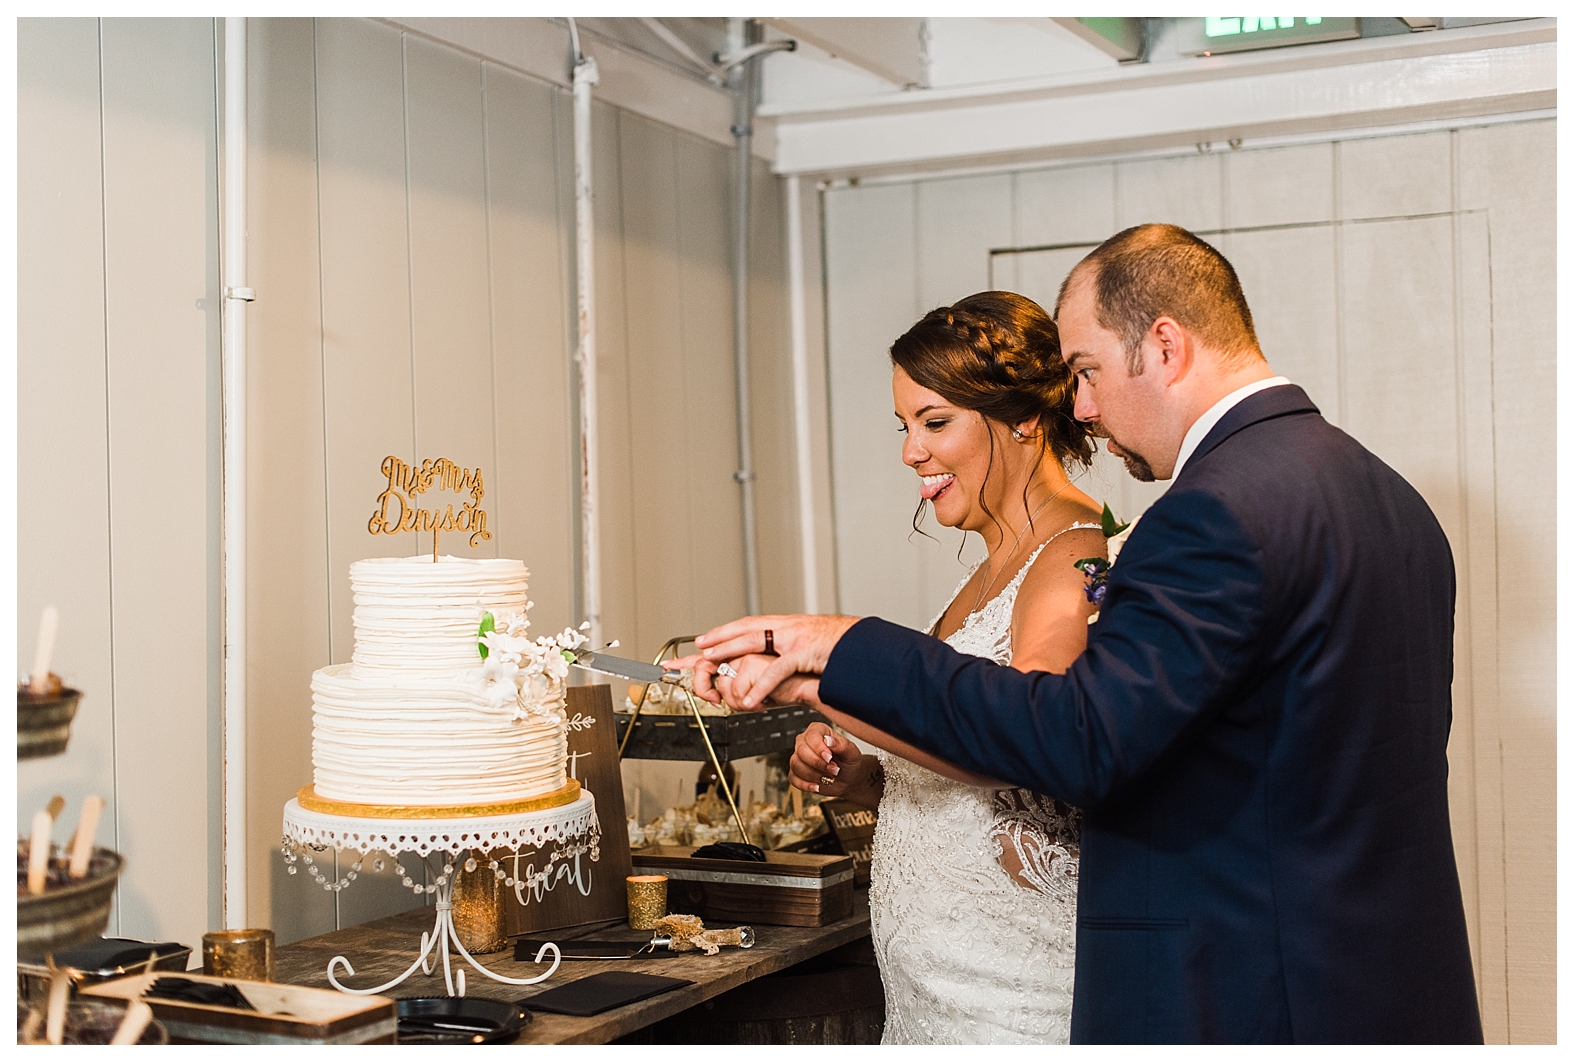 Cutting the Cake - Sara and Chad - Tampa Wedding Photographer